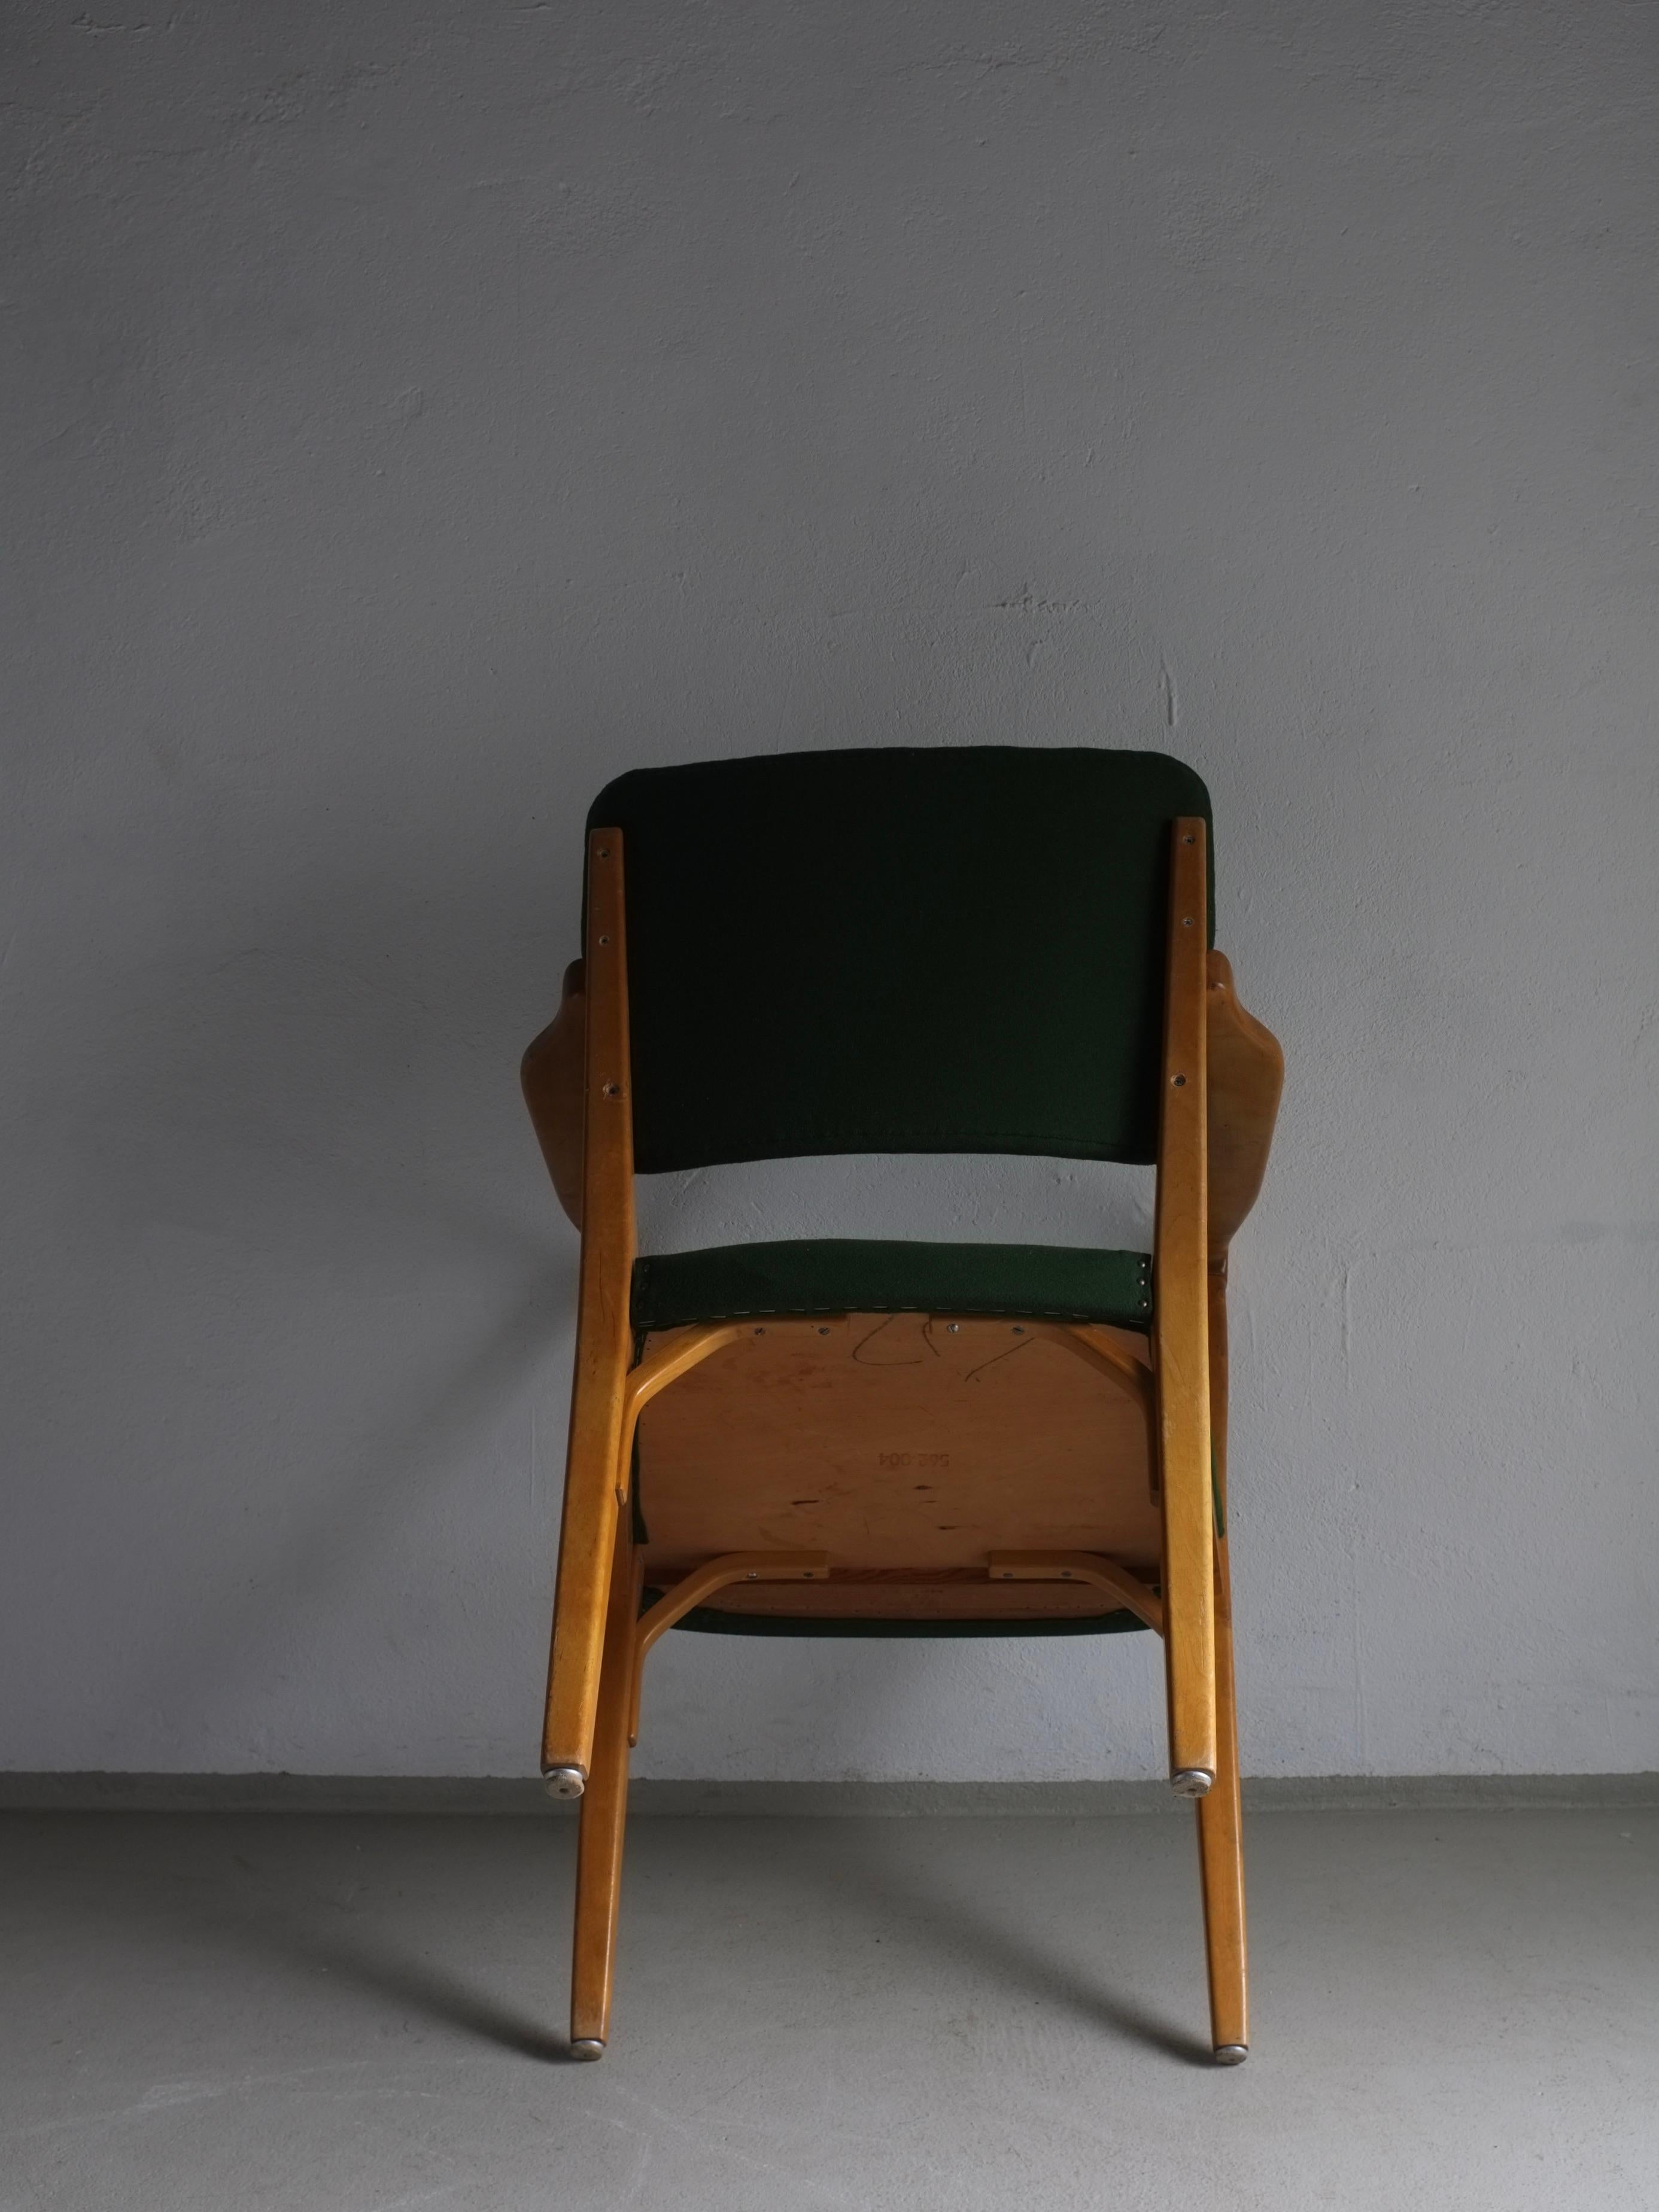 Upholstery Green Beechwood Armchair, Nordiska Kompaniet, Sweden 1940s For Sale